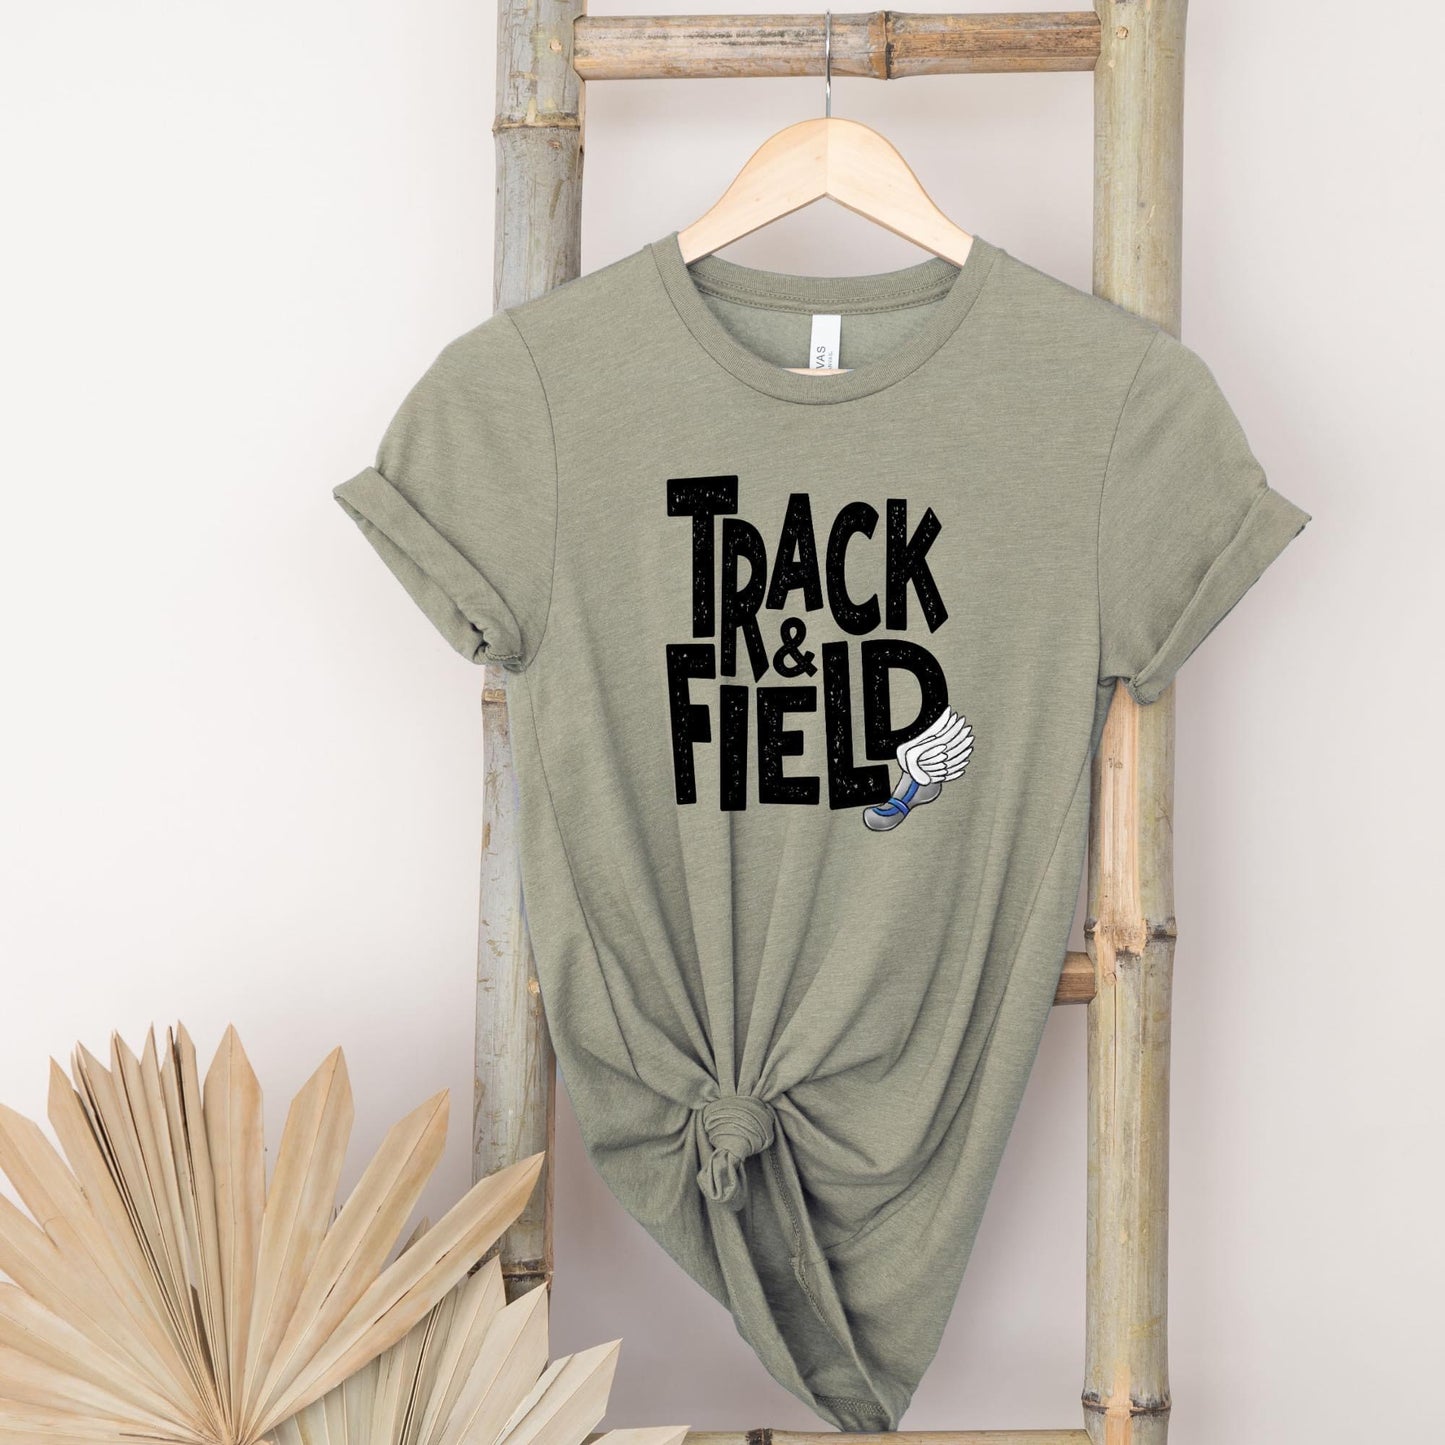 Track & Field